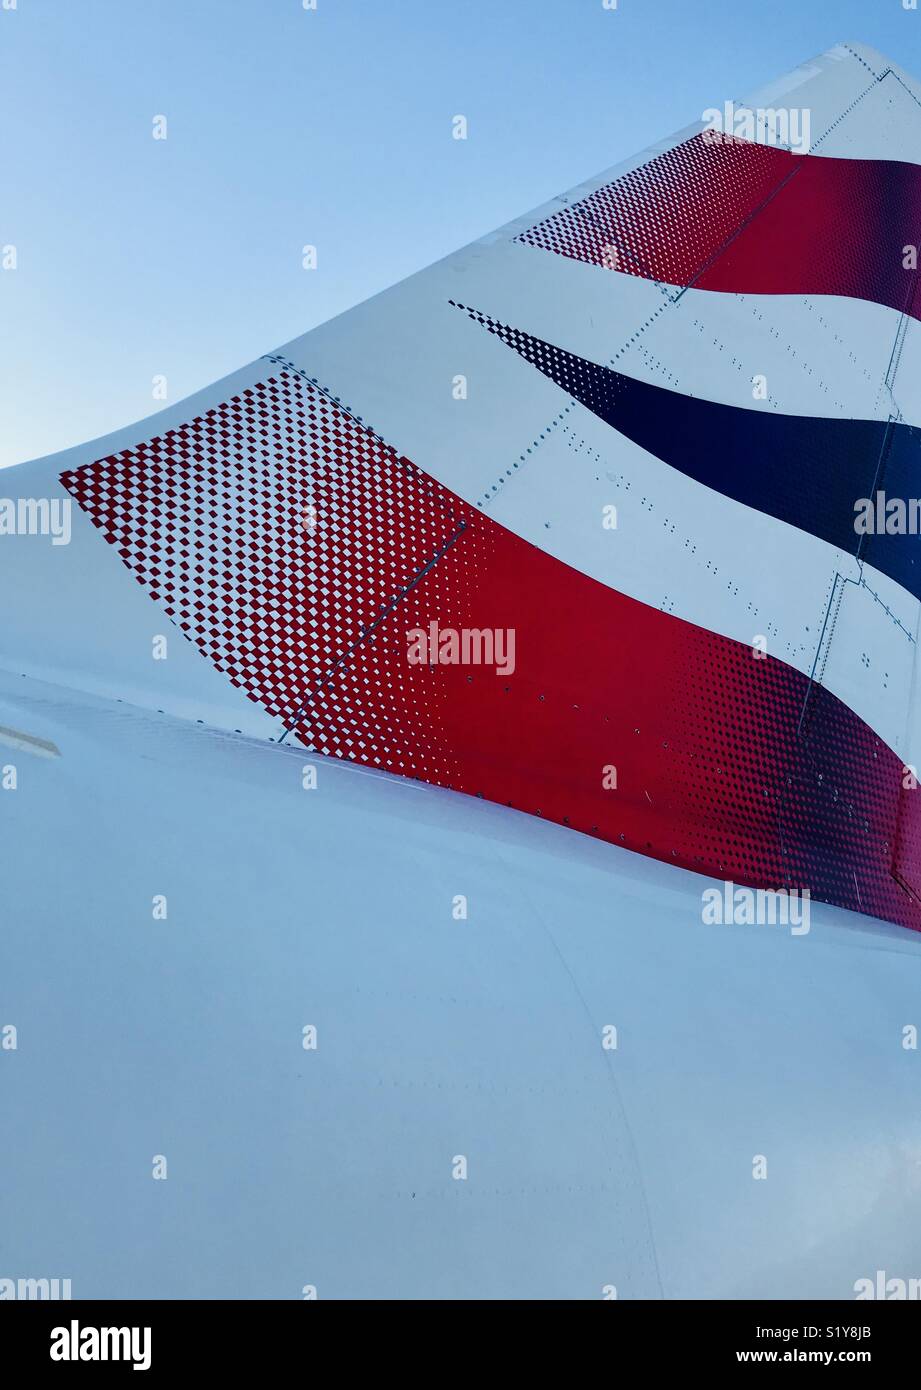 Pinna di coda di un British Airways jet Foto Stock